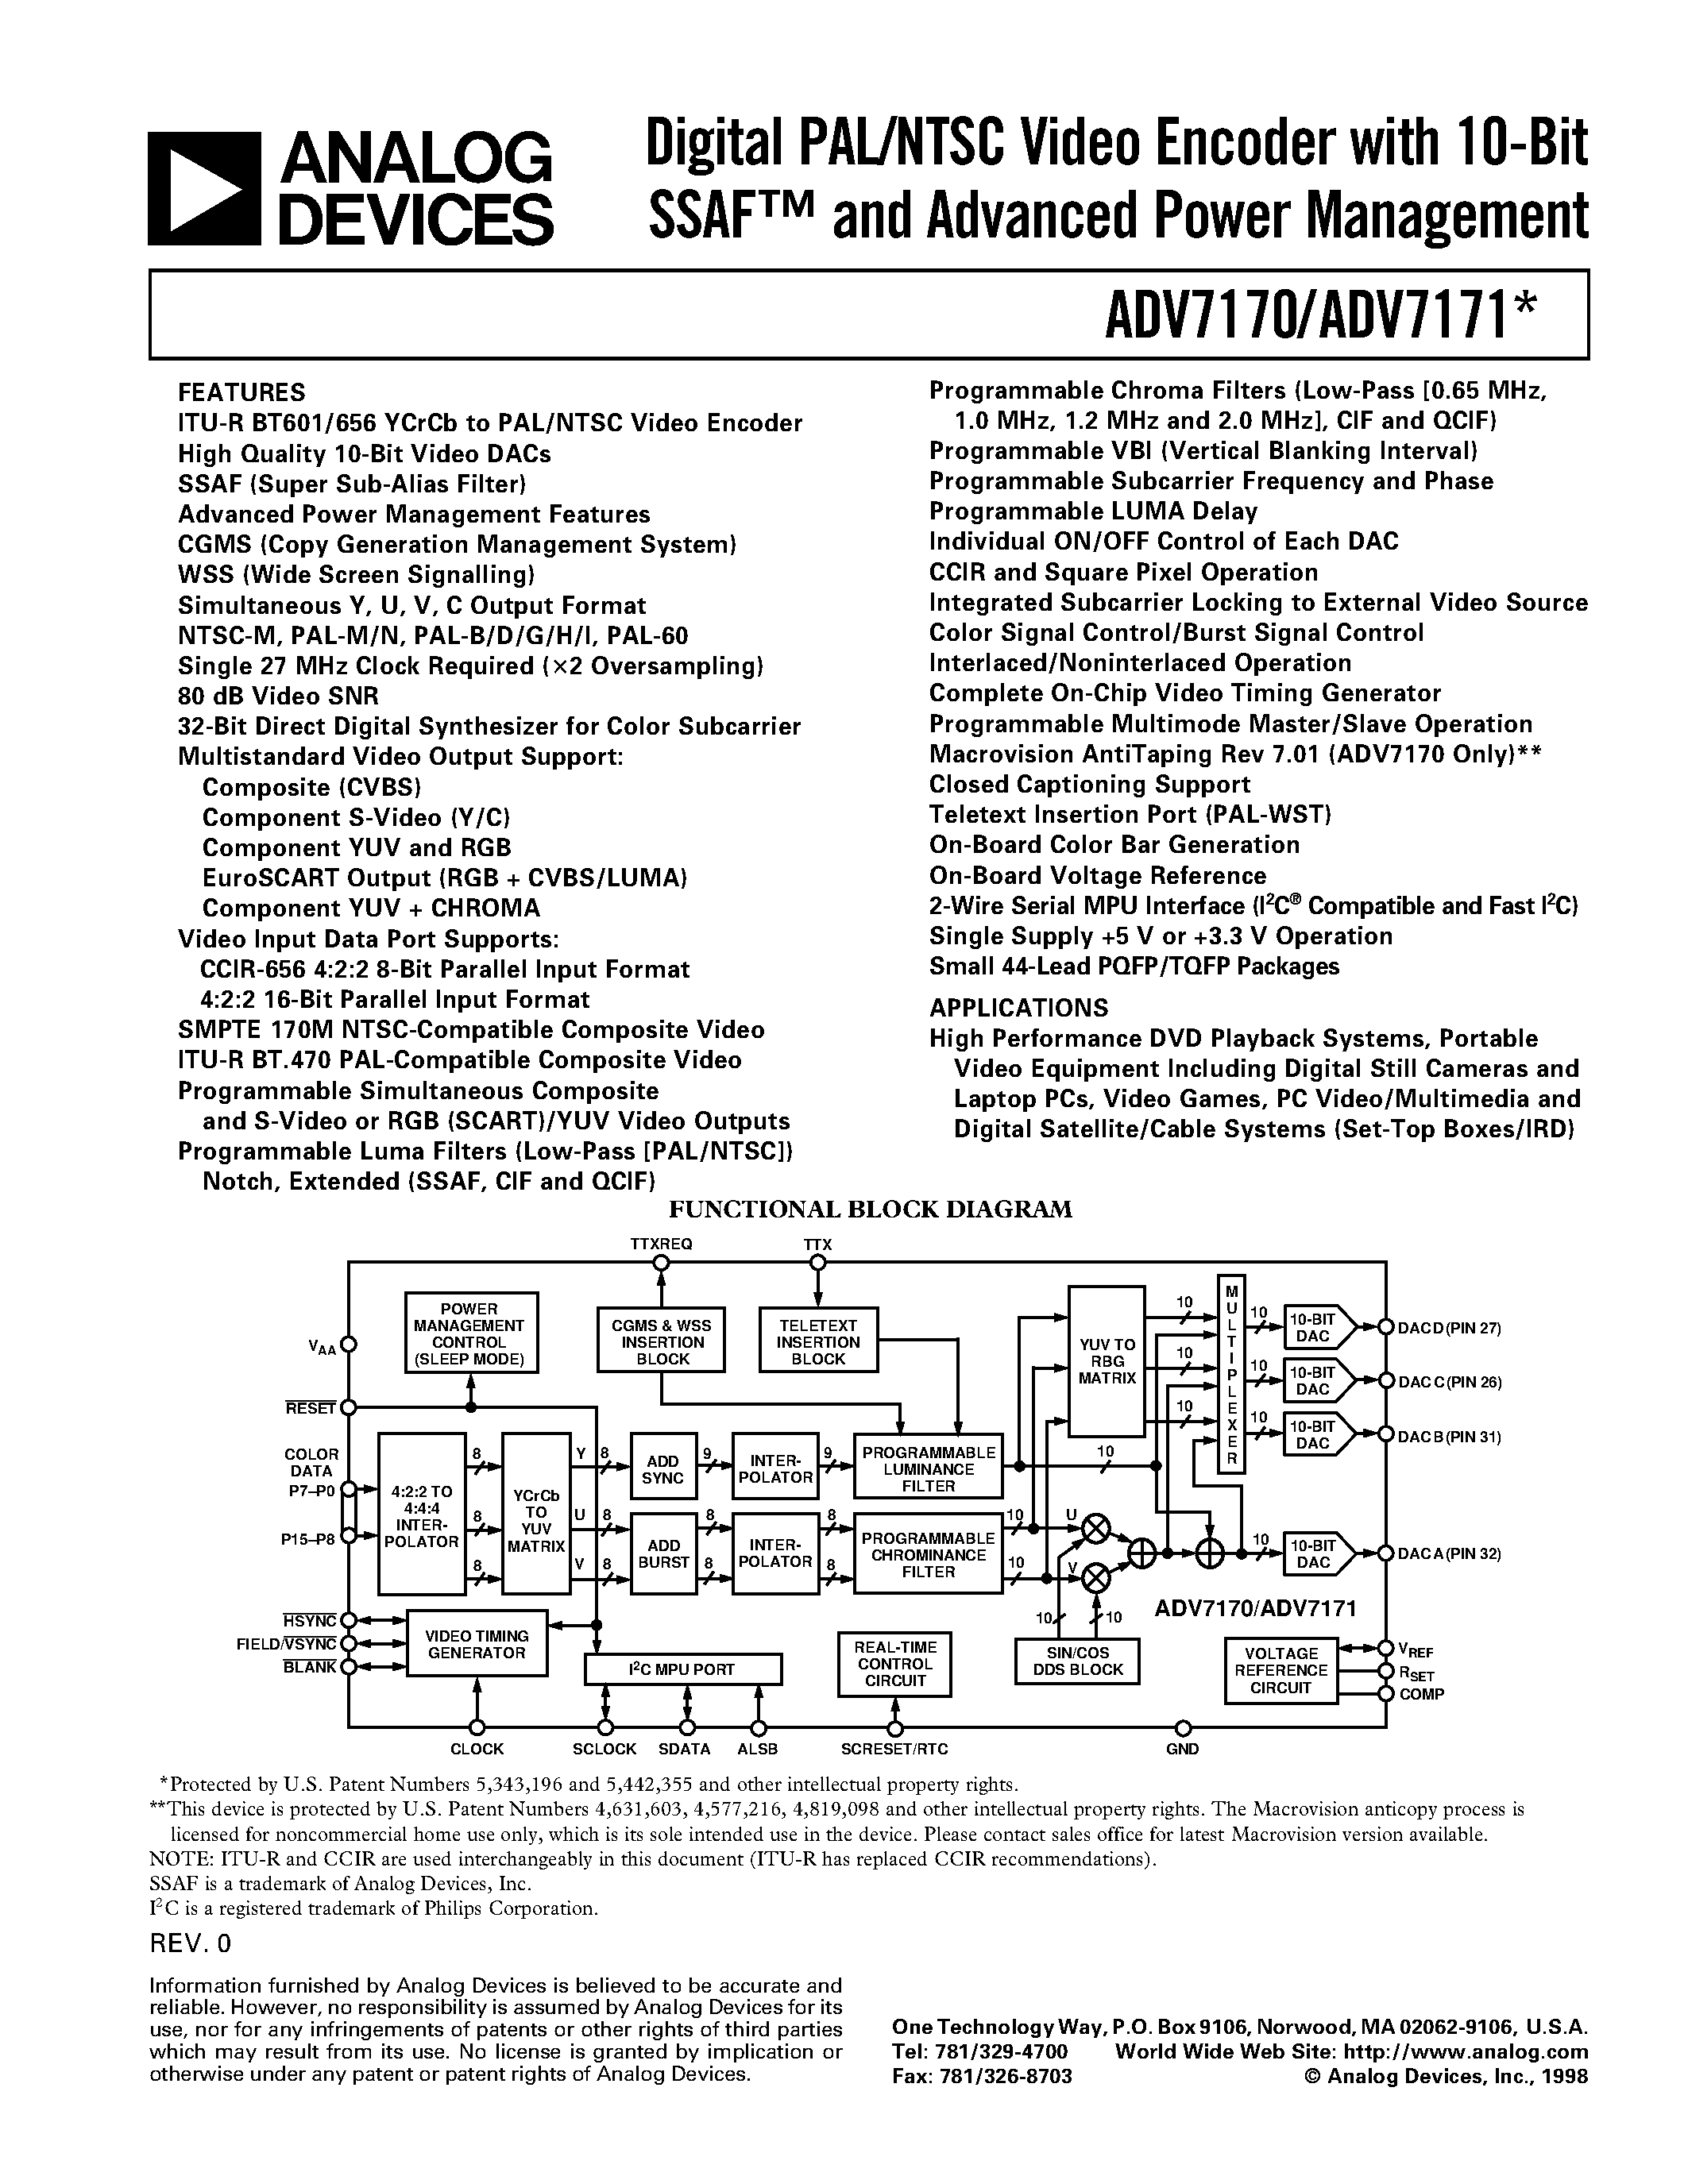 Даташит ADV7171 - Digital PAL/NTSC Video Encoder with 10-Bit SSAF and Advanced Power Management страница 1